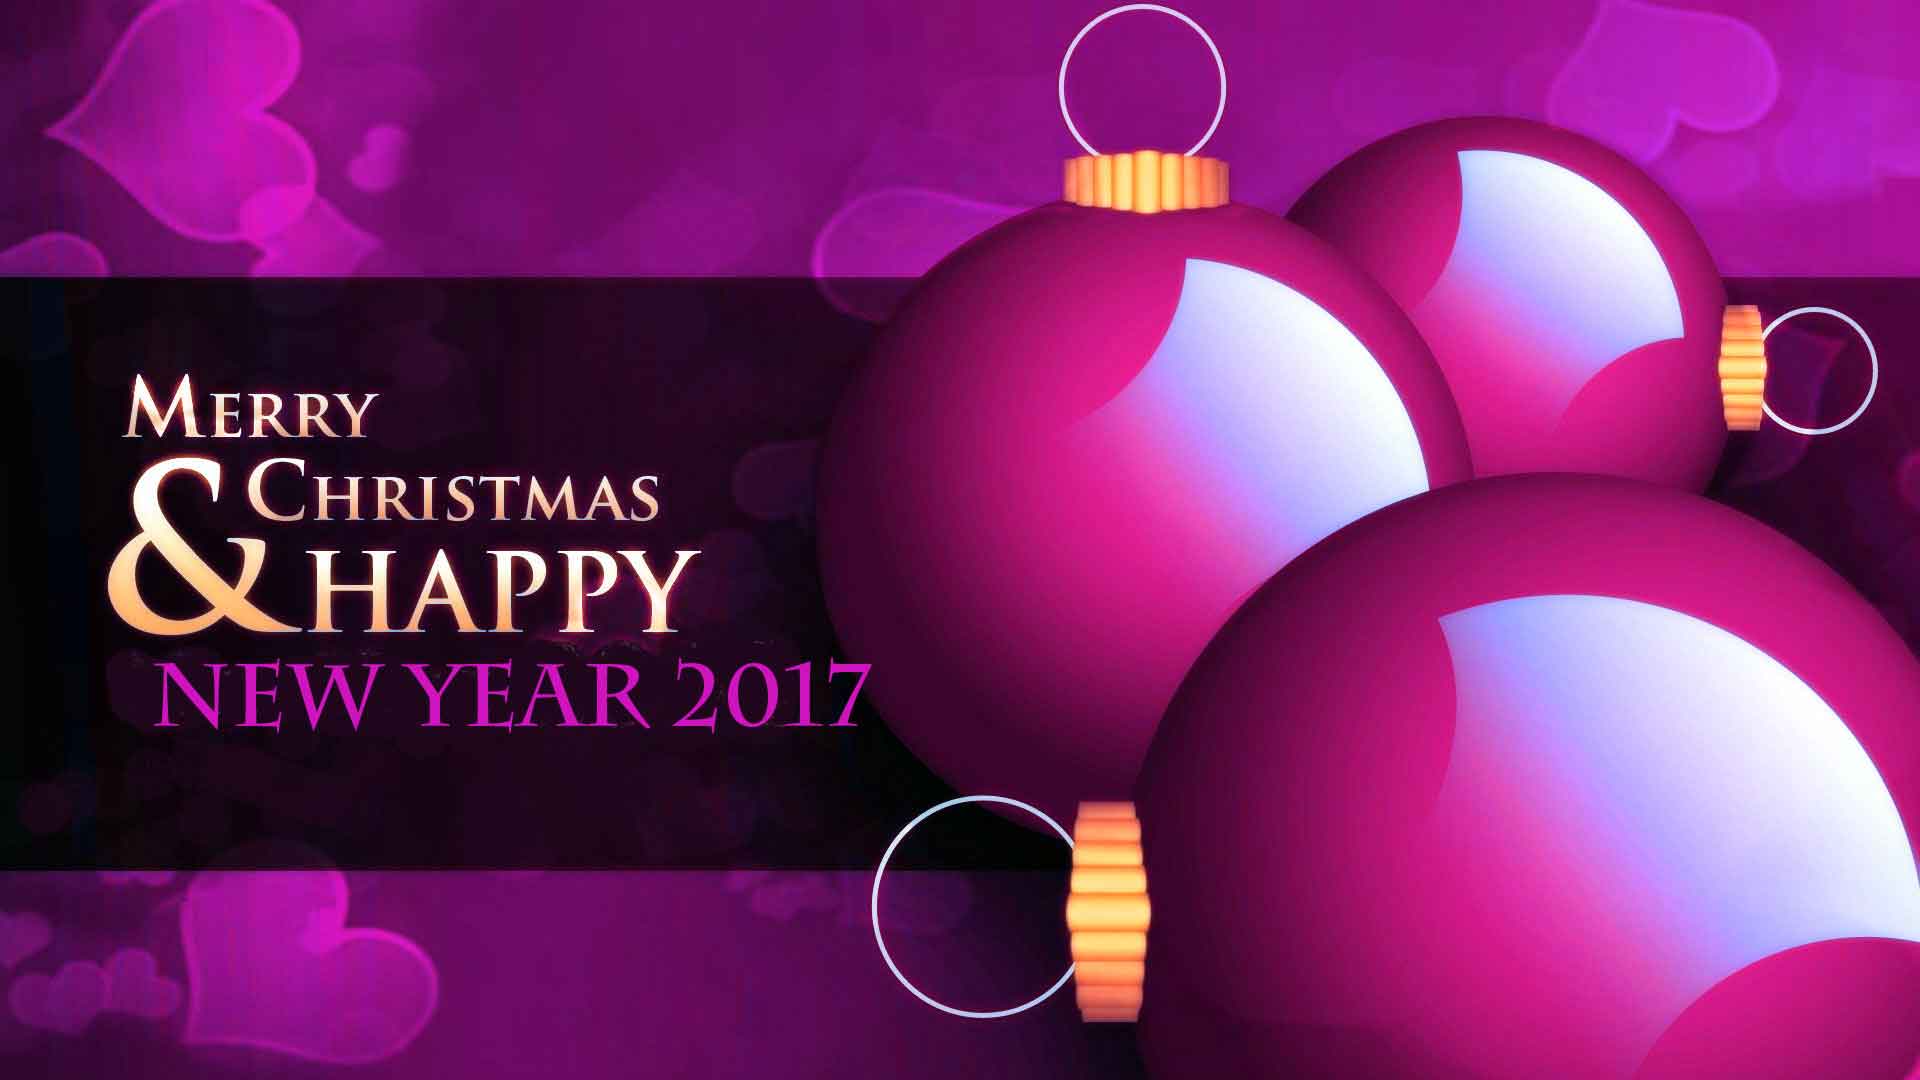 Best}* Happy New Year 2017 HD Wallpaper New Year 2018